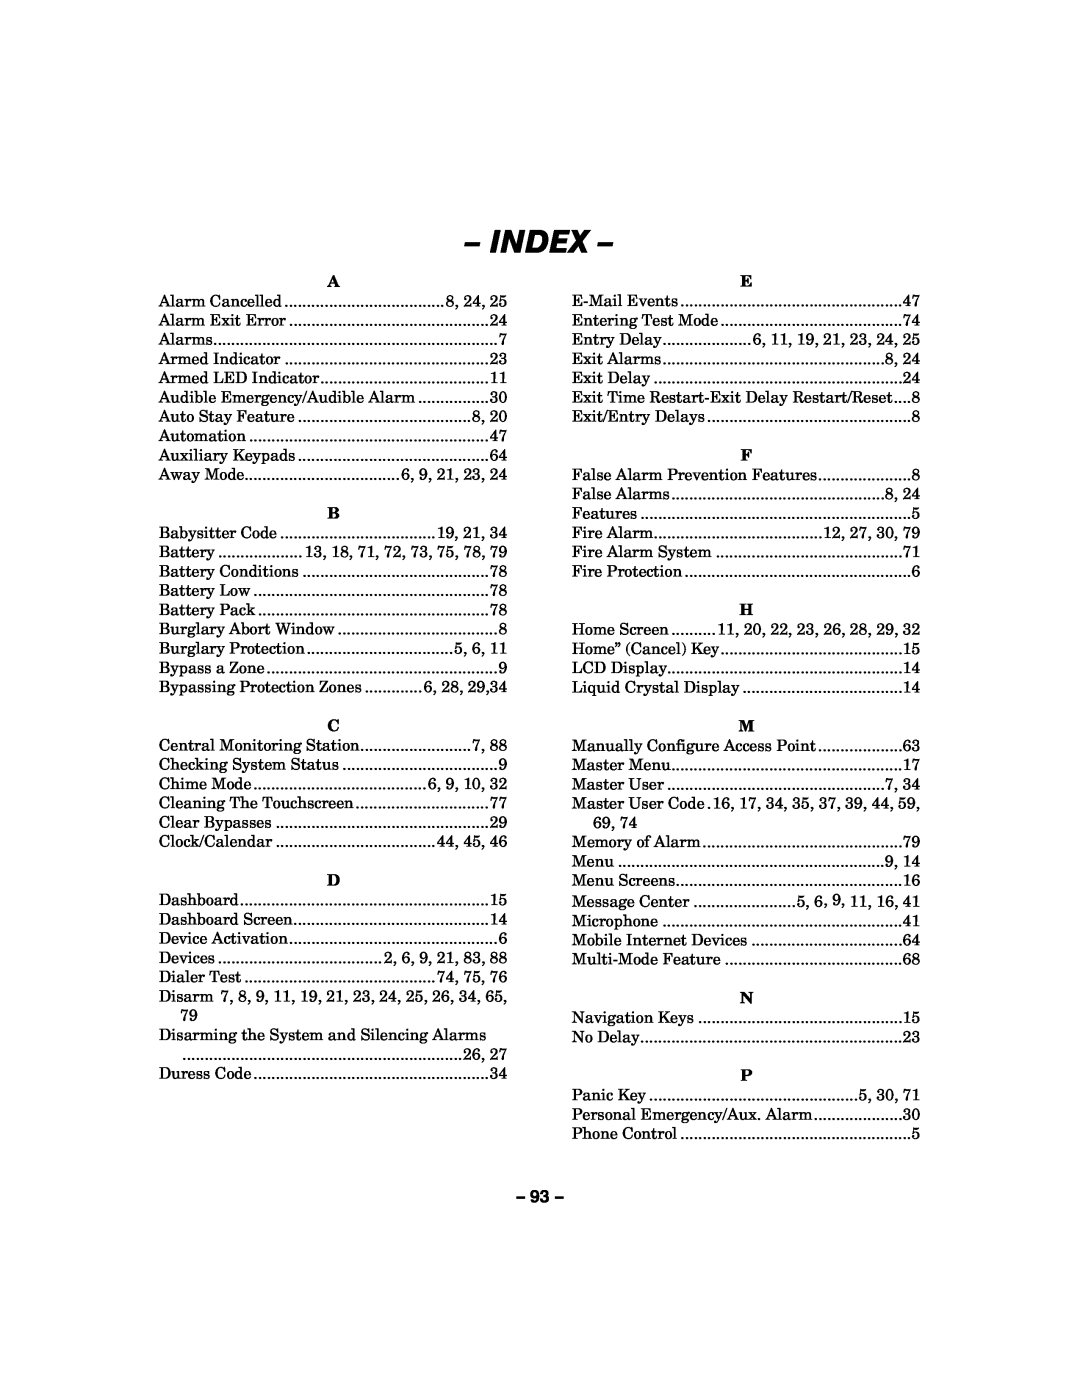 Honeywell L5100 manual Index 